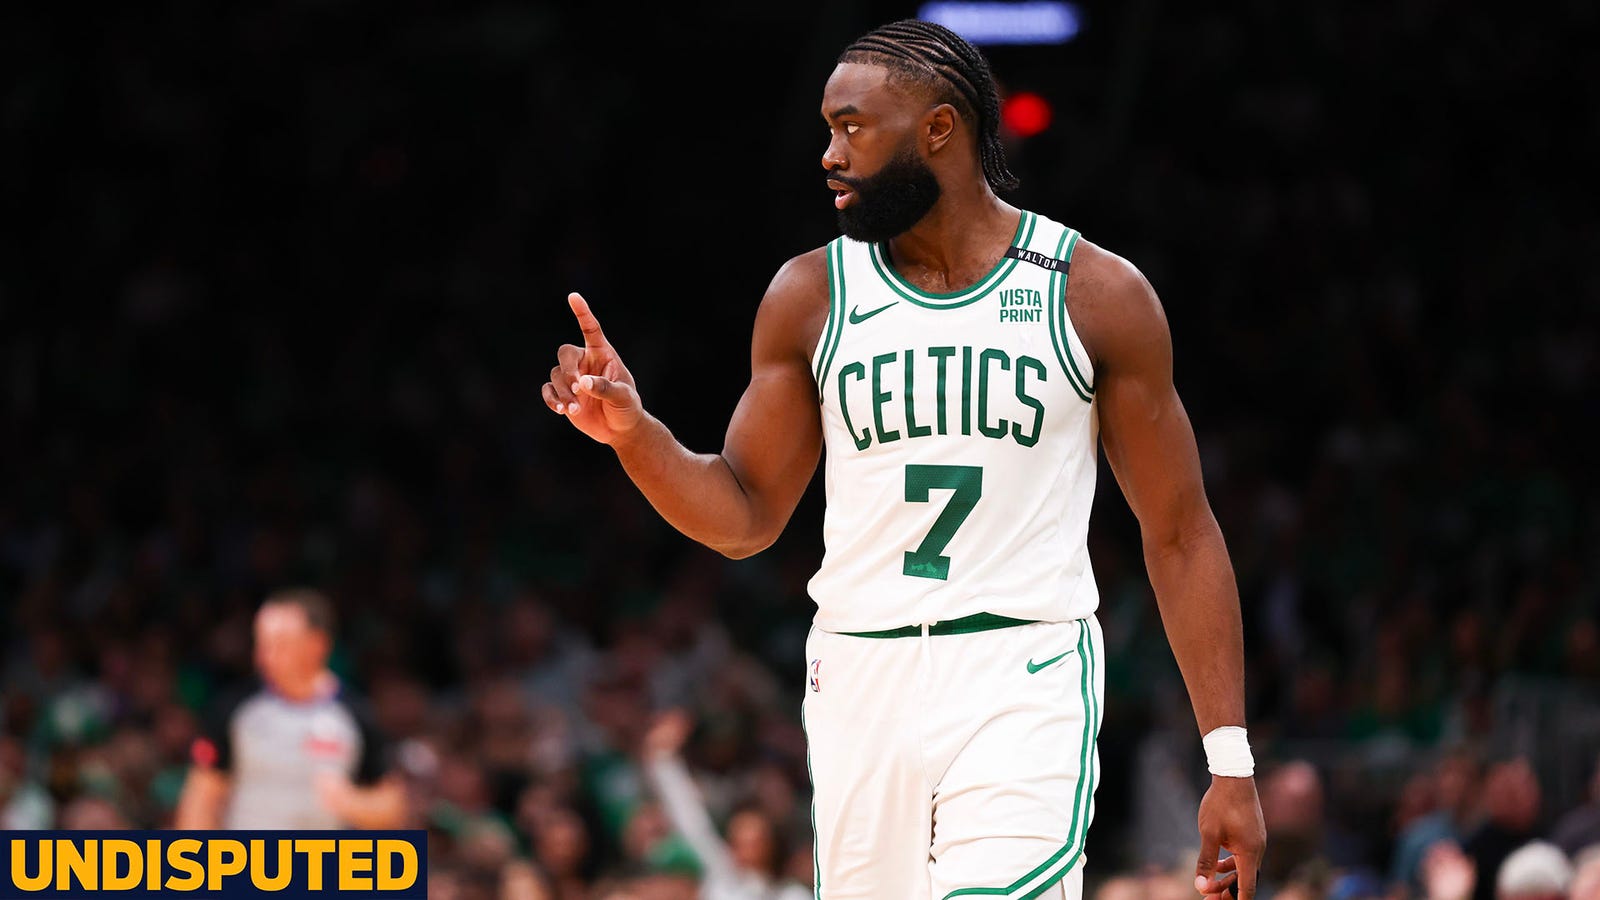 Celtics show no rust, dominate Mavericks in Game 1 of NBA Finals